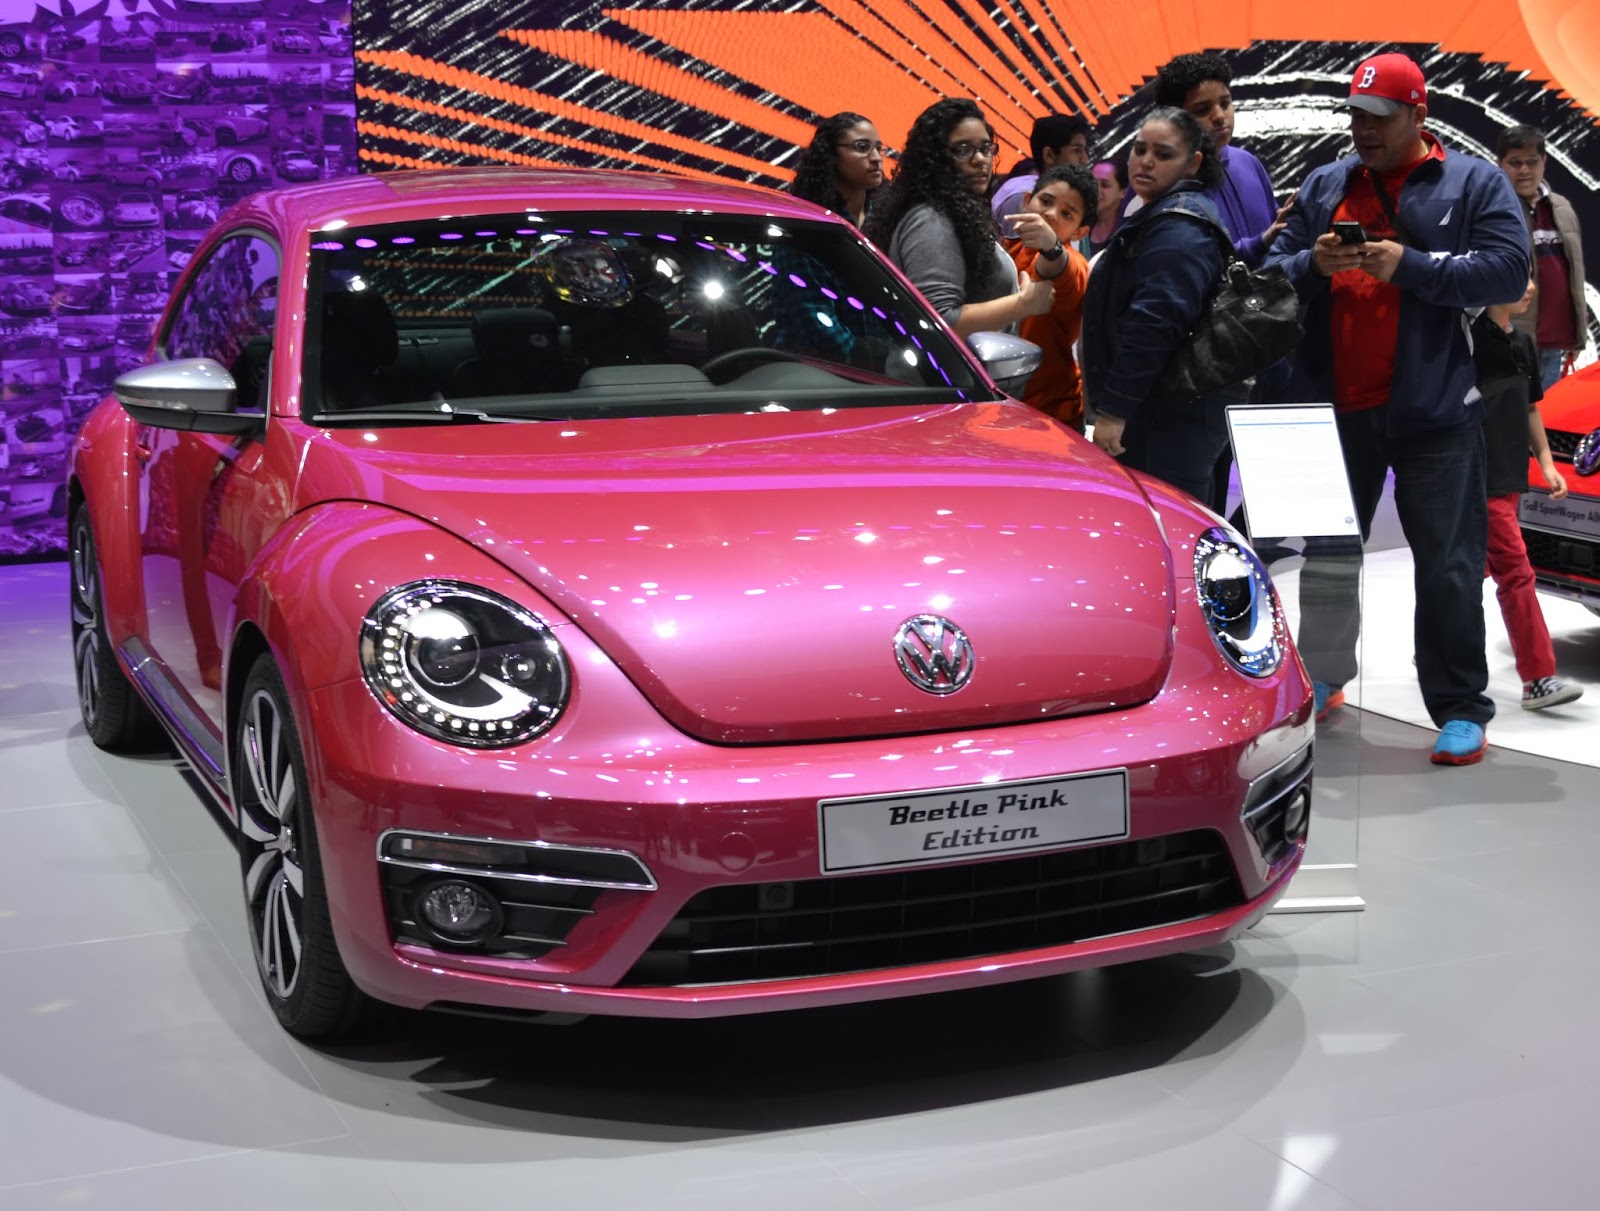 Volkswagen "жук". Ежегодное автошоу в Нью-Йорке - 2015 (New York International Auto Show - 2015)